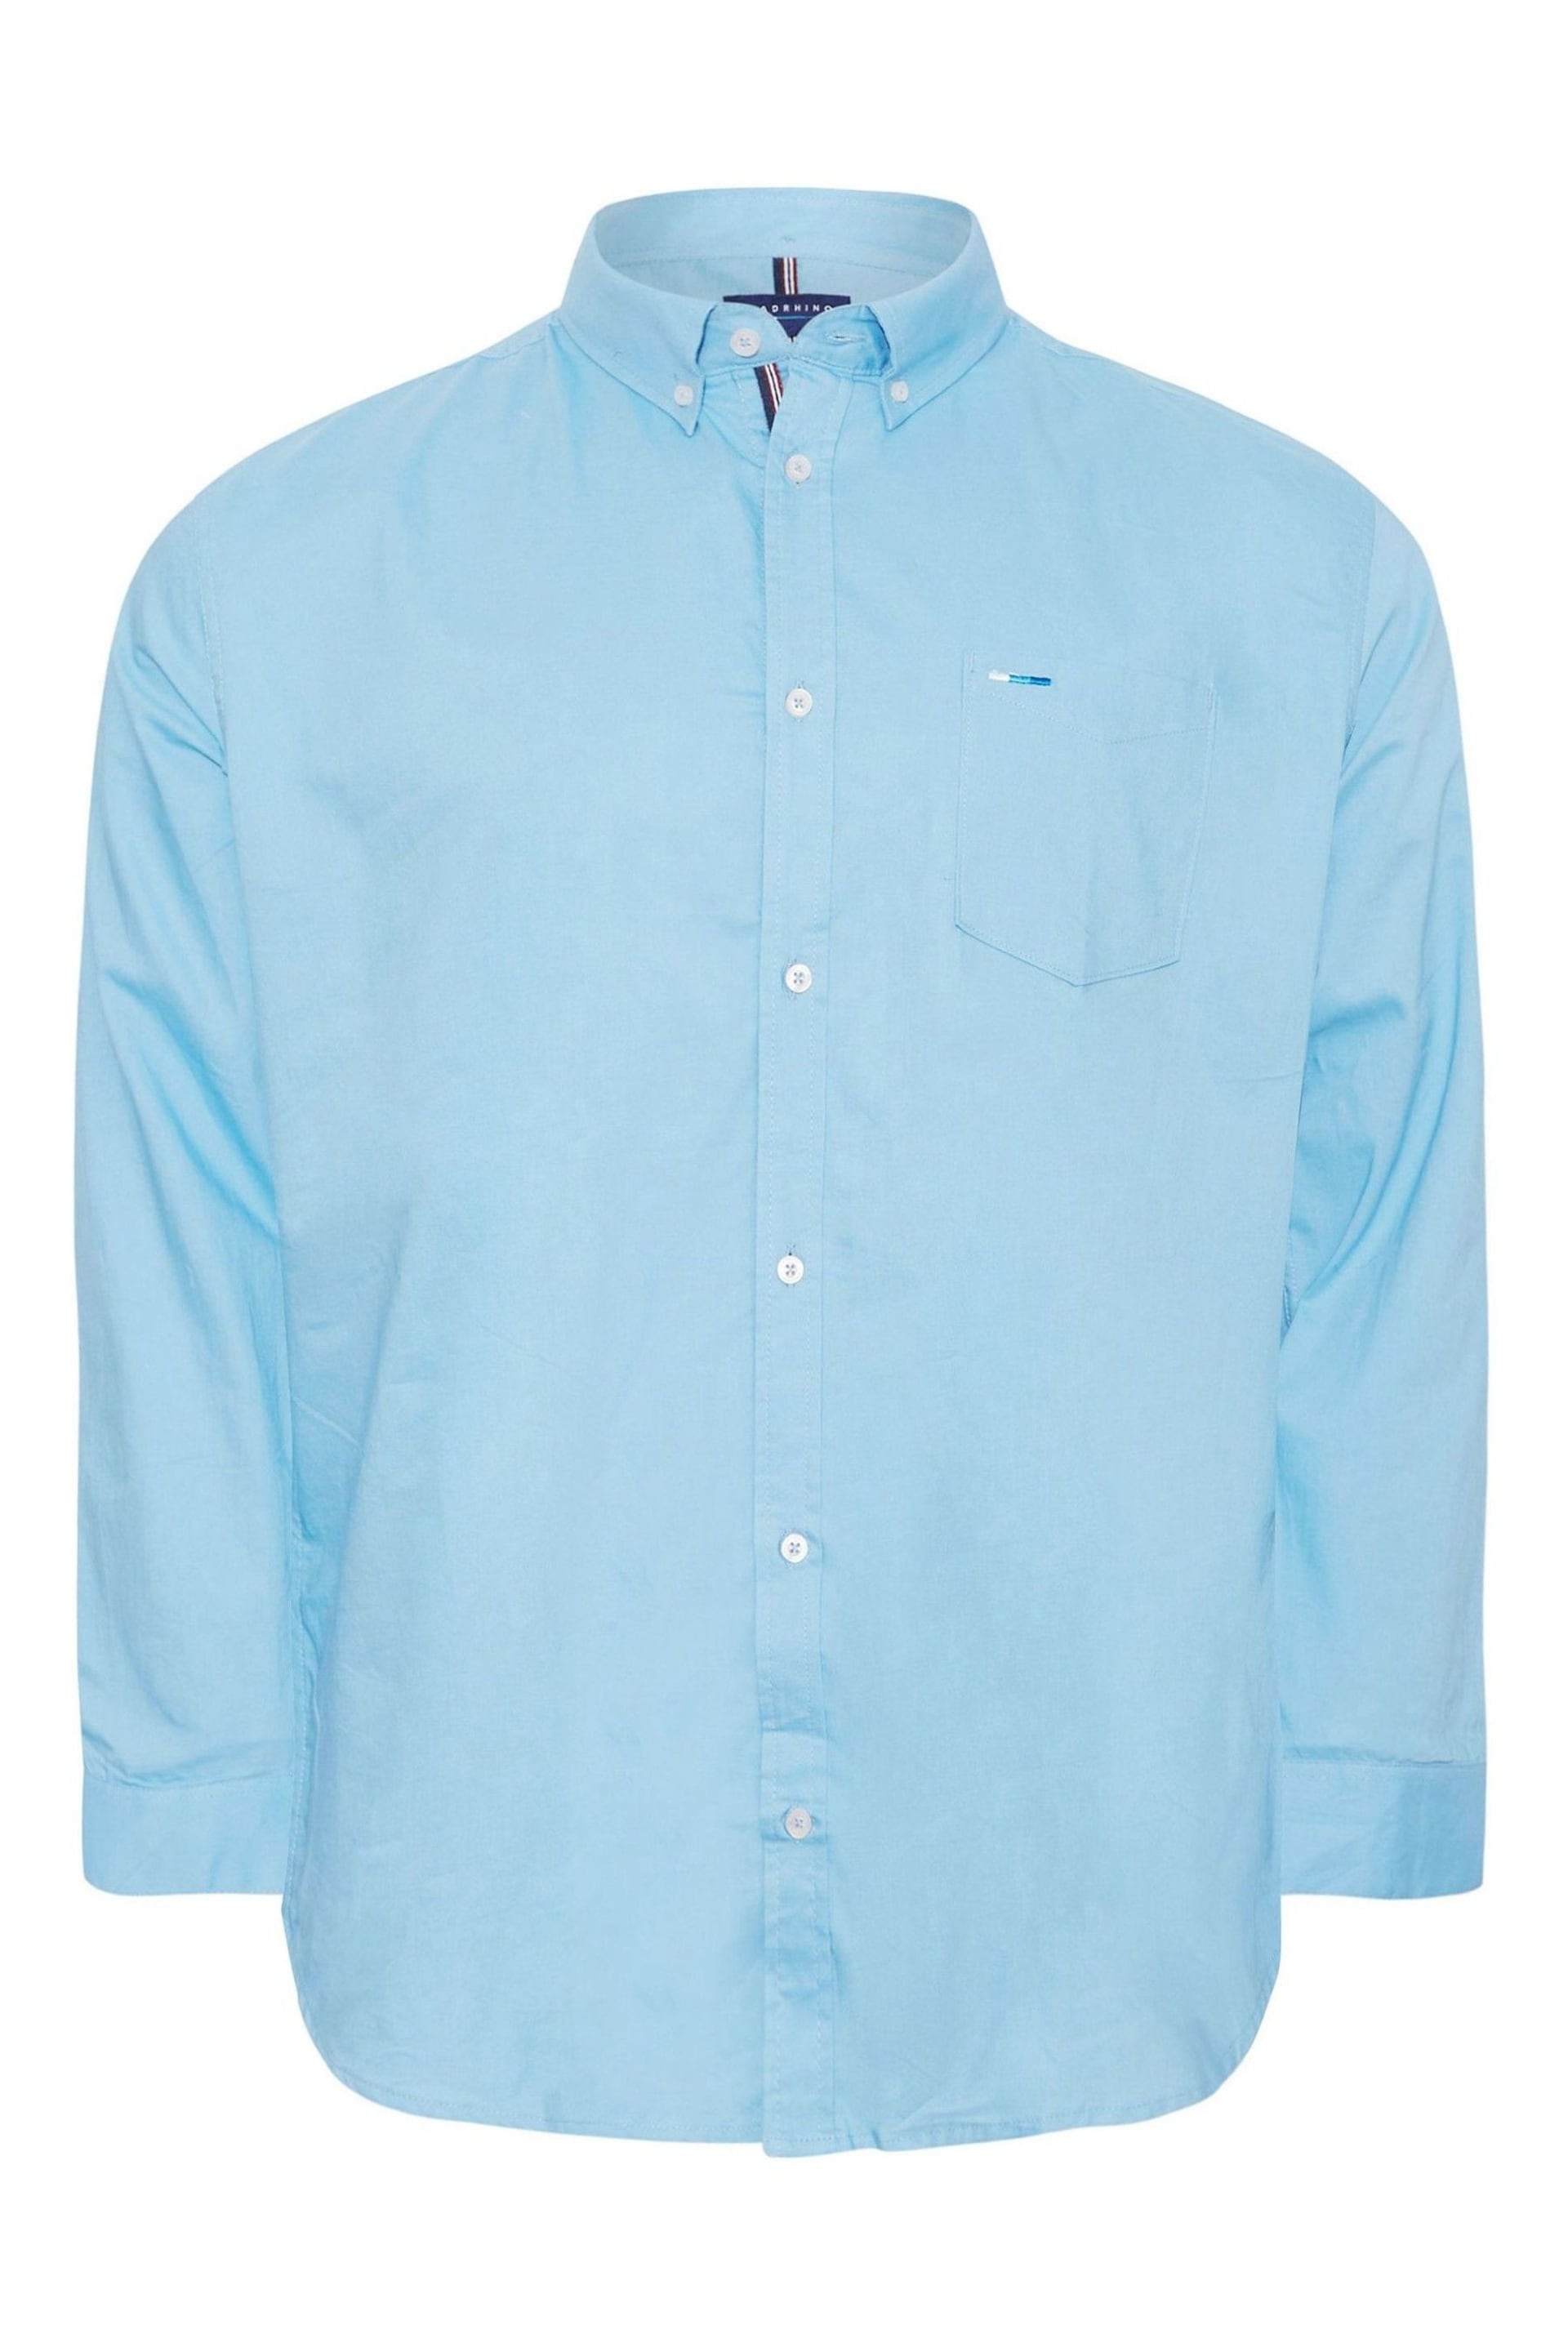 BadRhino Big & Tall Blue Long Sleeve Shirt - Image 2 of 3